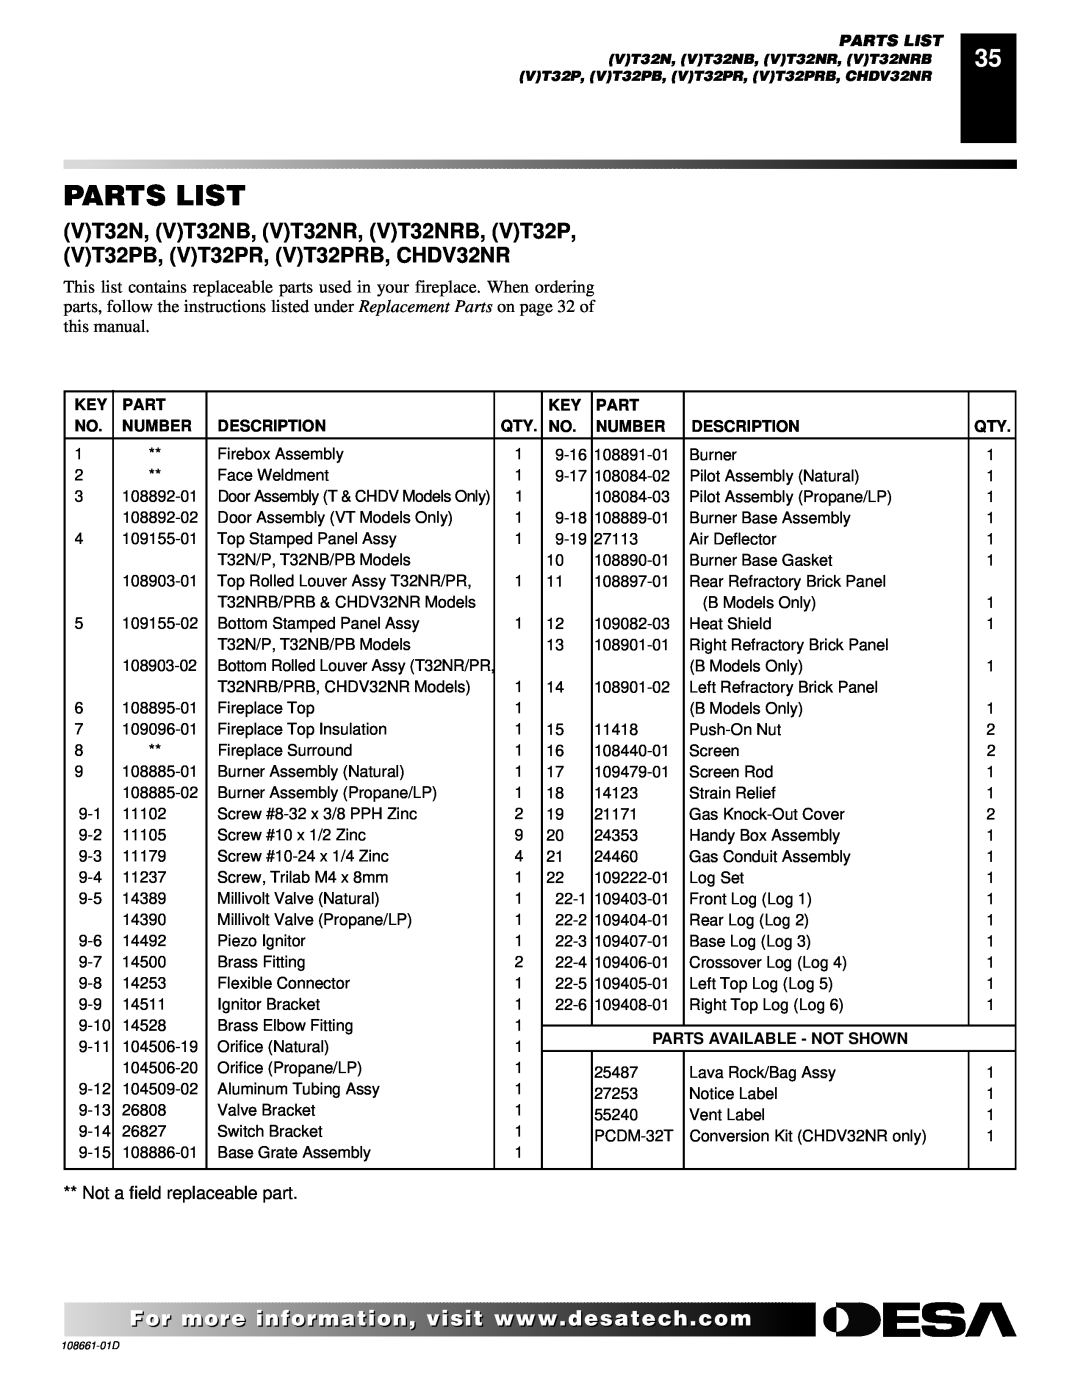 Desa CTDV36NR, (V)T32N, (V)T36N SERIES installation manual Parts List, Number, Description, Parts Available - Not Shown 